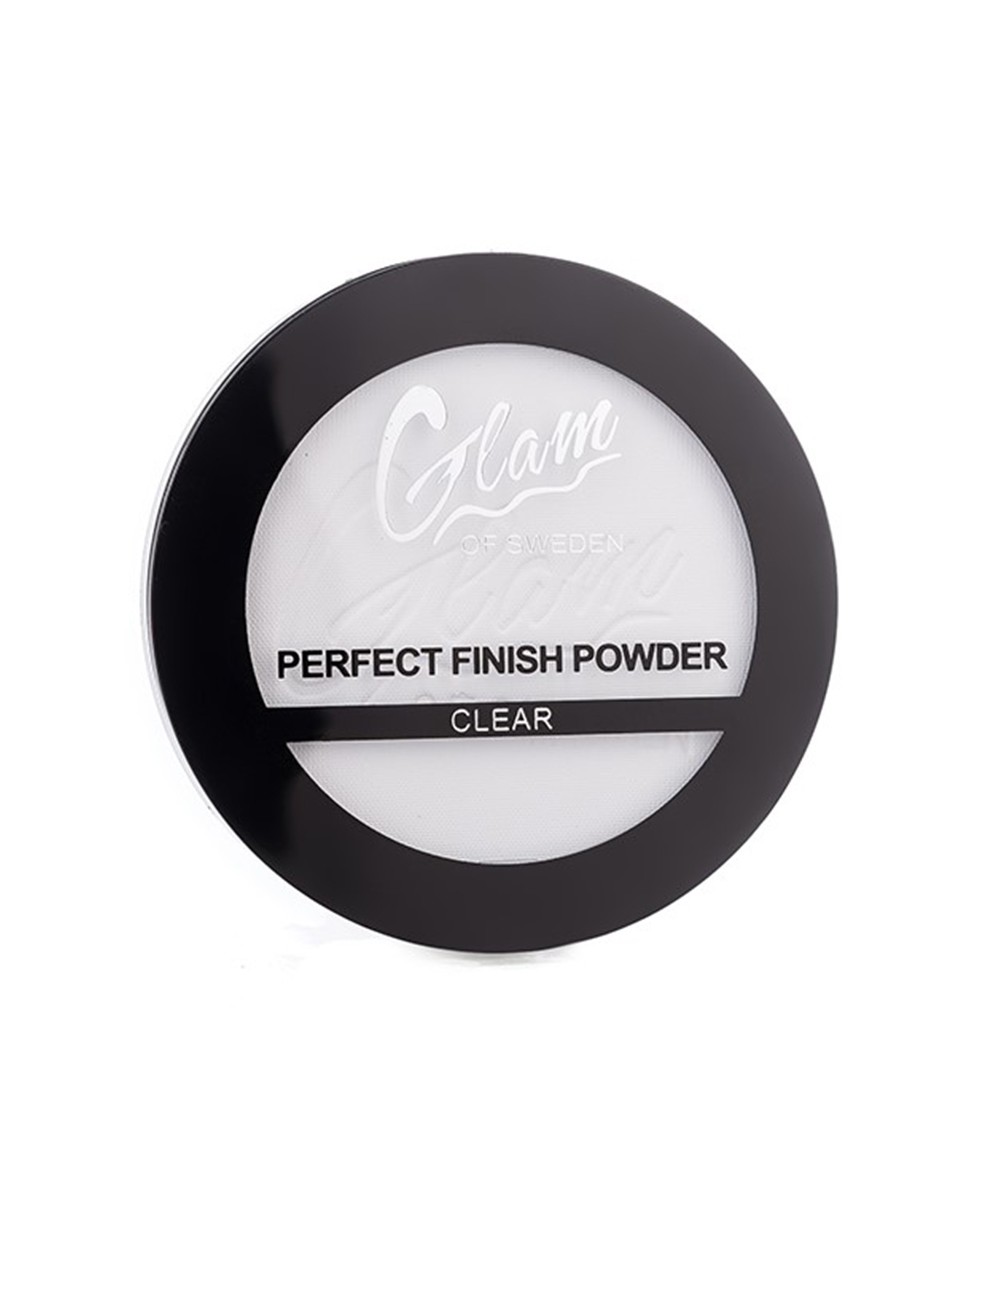 PERFECT FINISH powder 8 gr